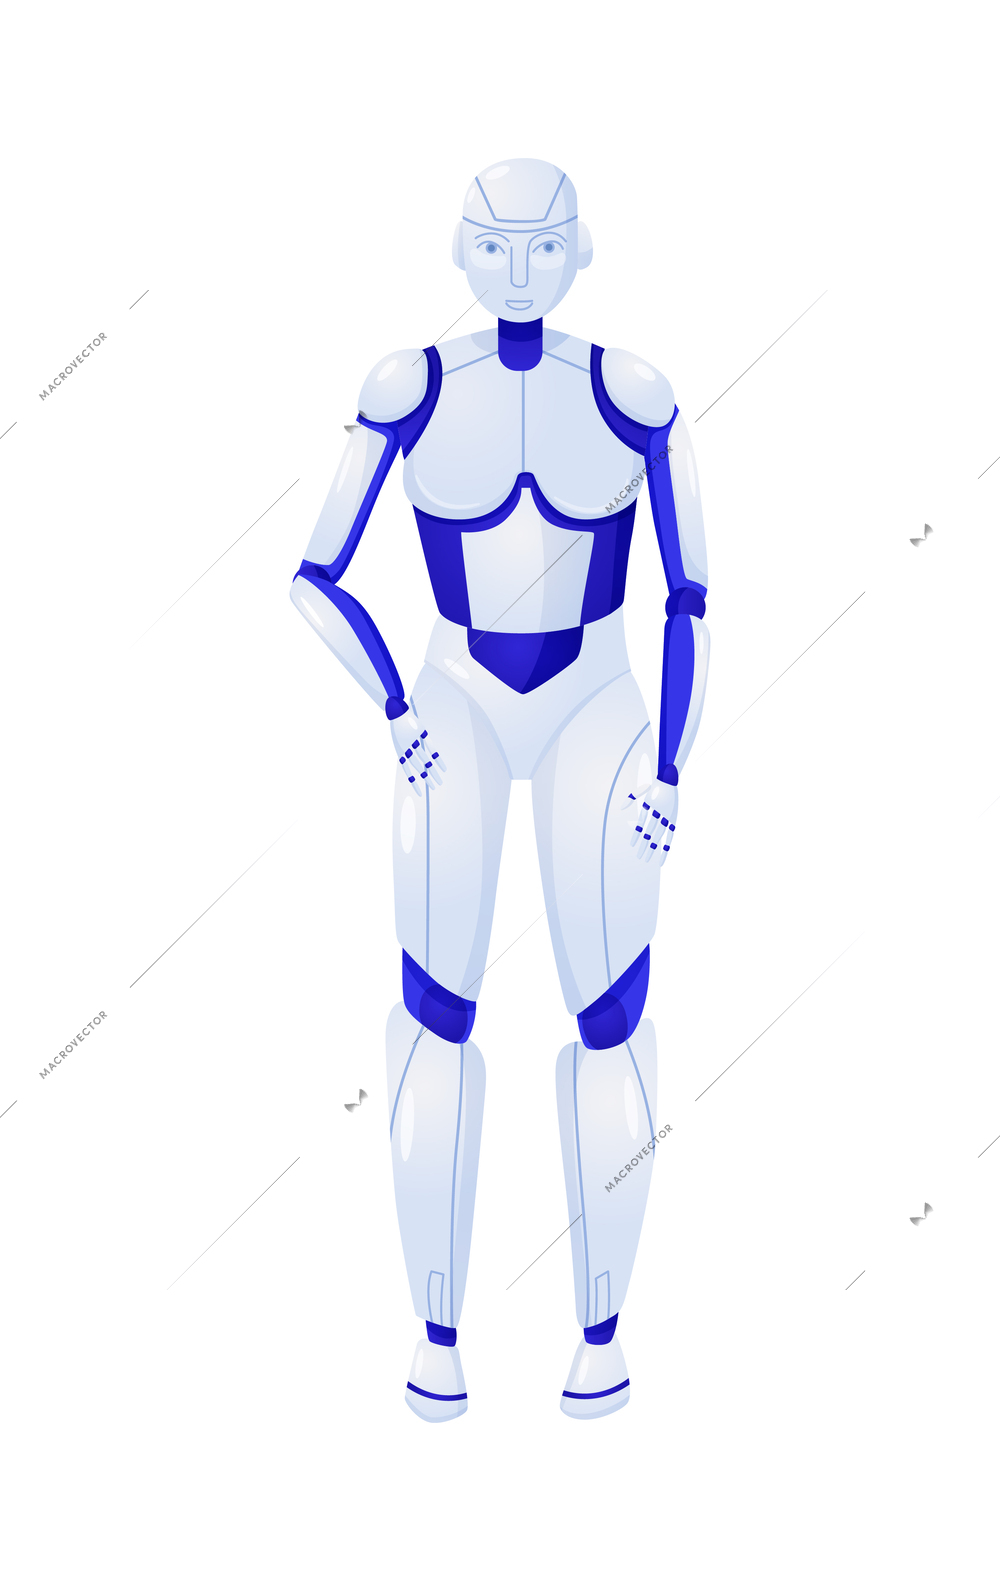 Cute humanoid robot on white background flat vector illustration